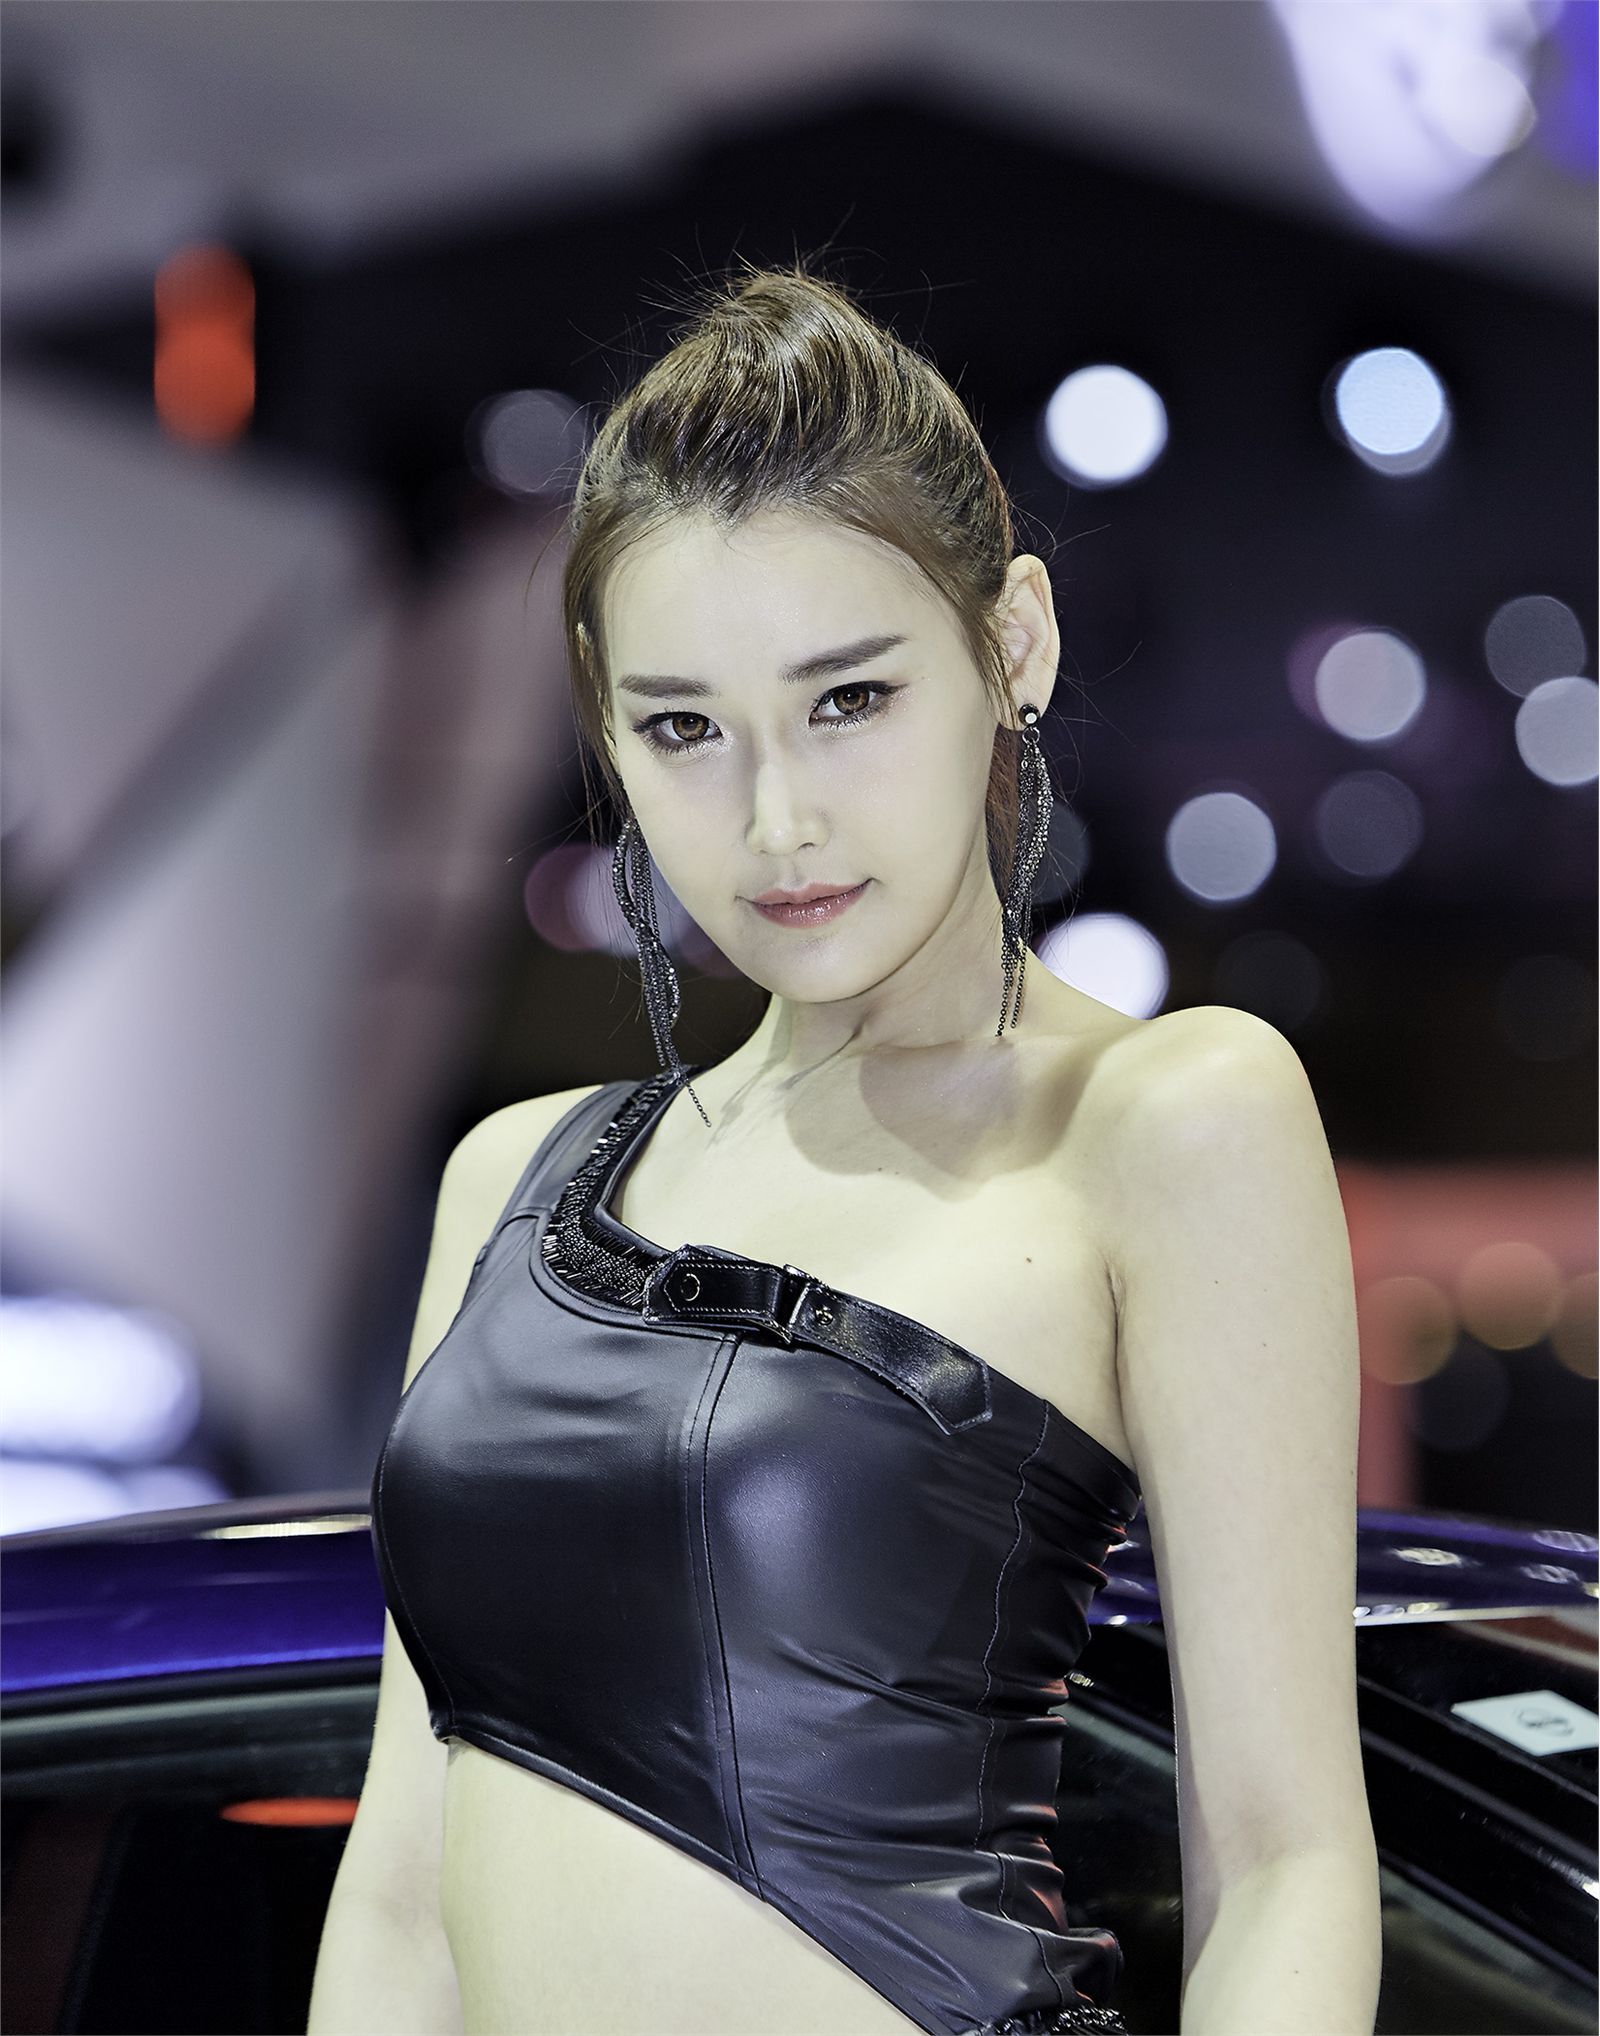 2015 Korea International Auto Show super model Li Xiaoying